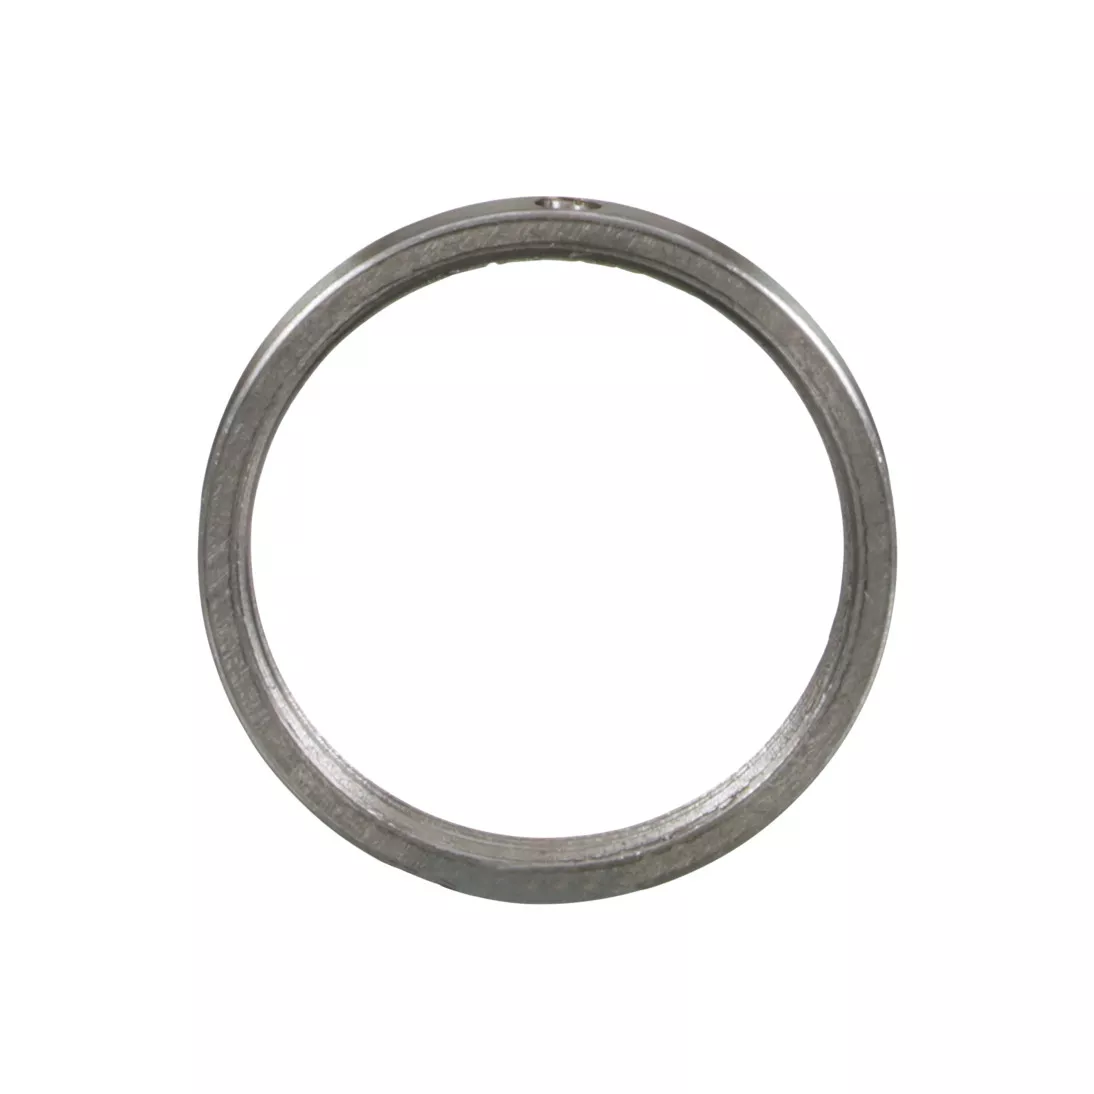 3M™ Lock Ring with 6-32 Thread 55218